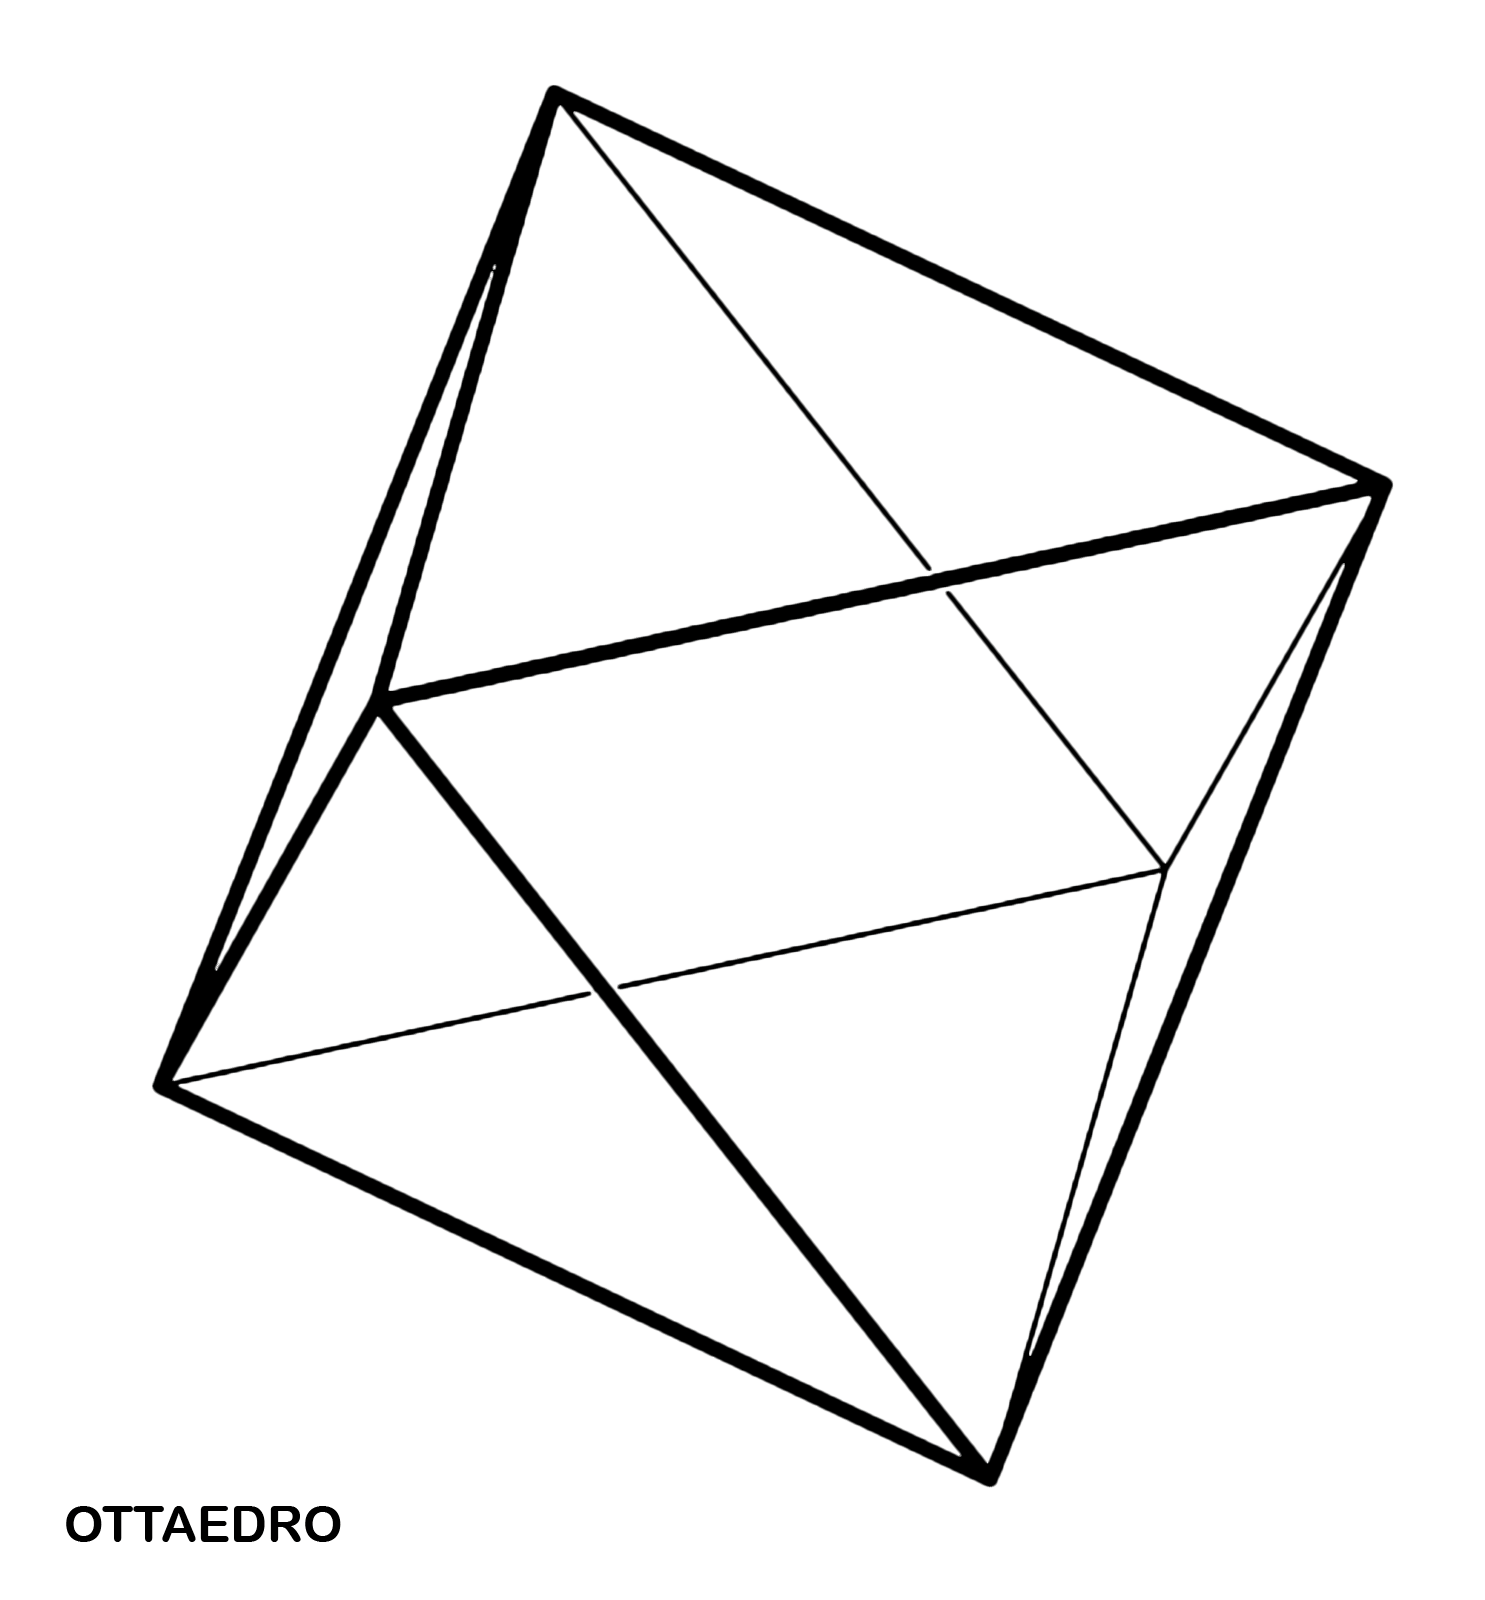 Figure geometriche - Figura geometrica solida - Ottaedro